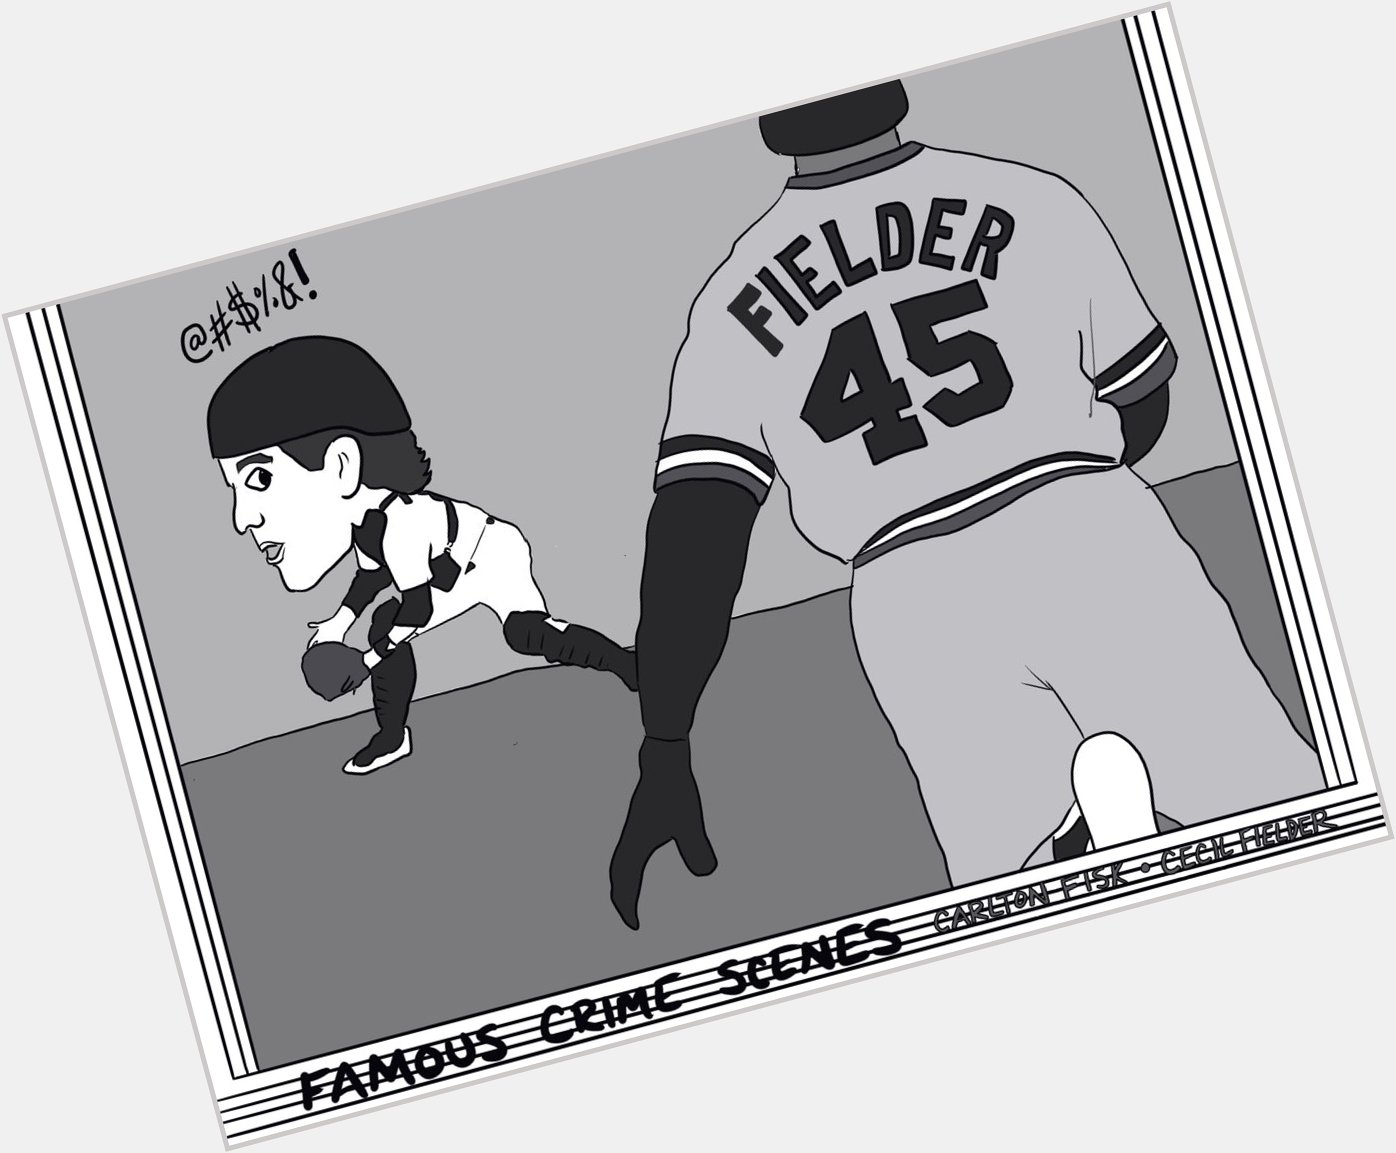 Happy Birthday Cecil Fielder! 